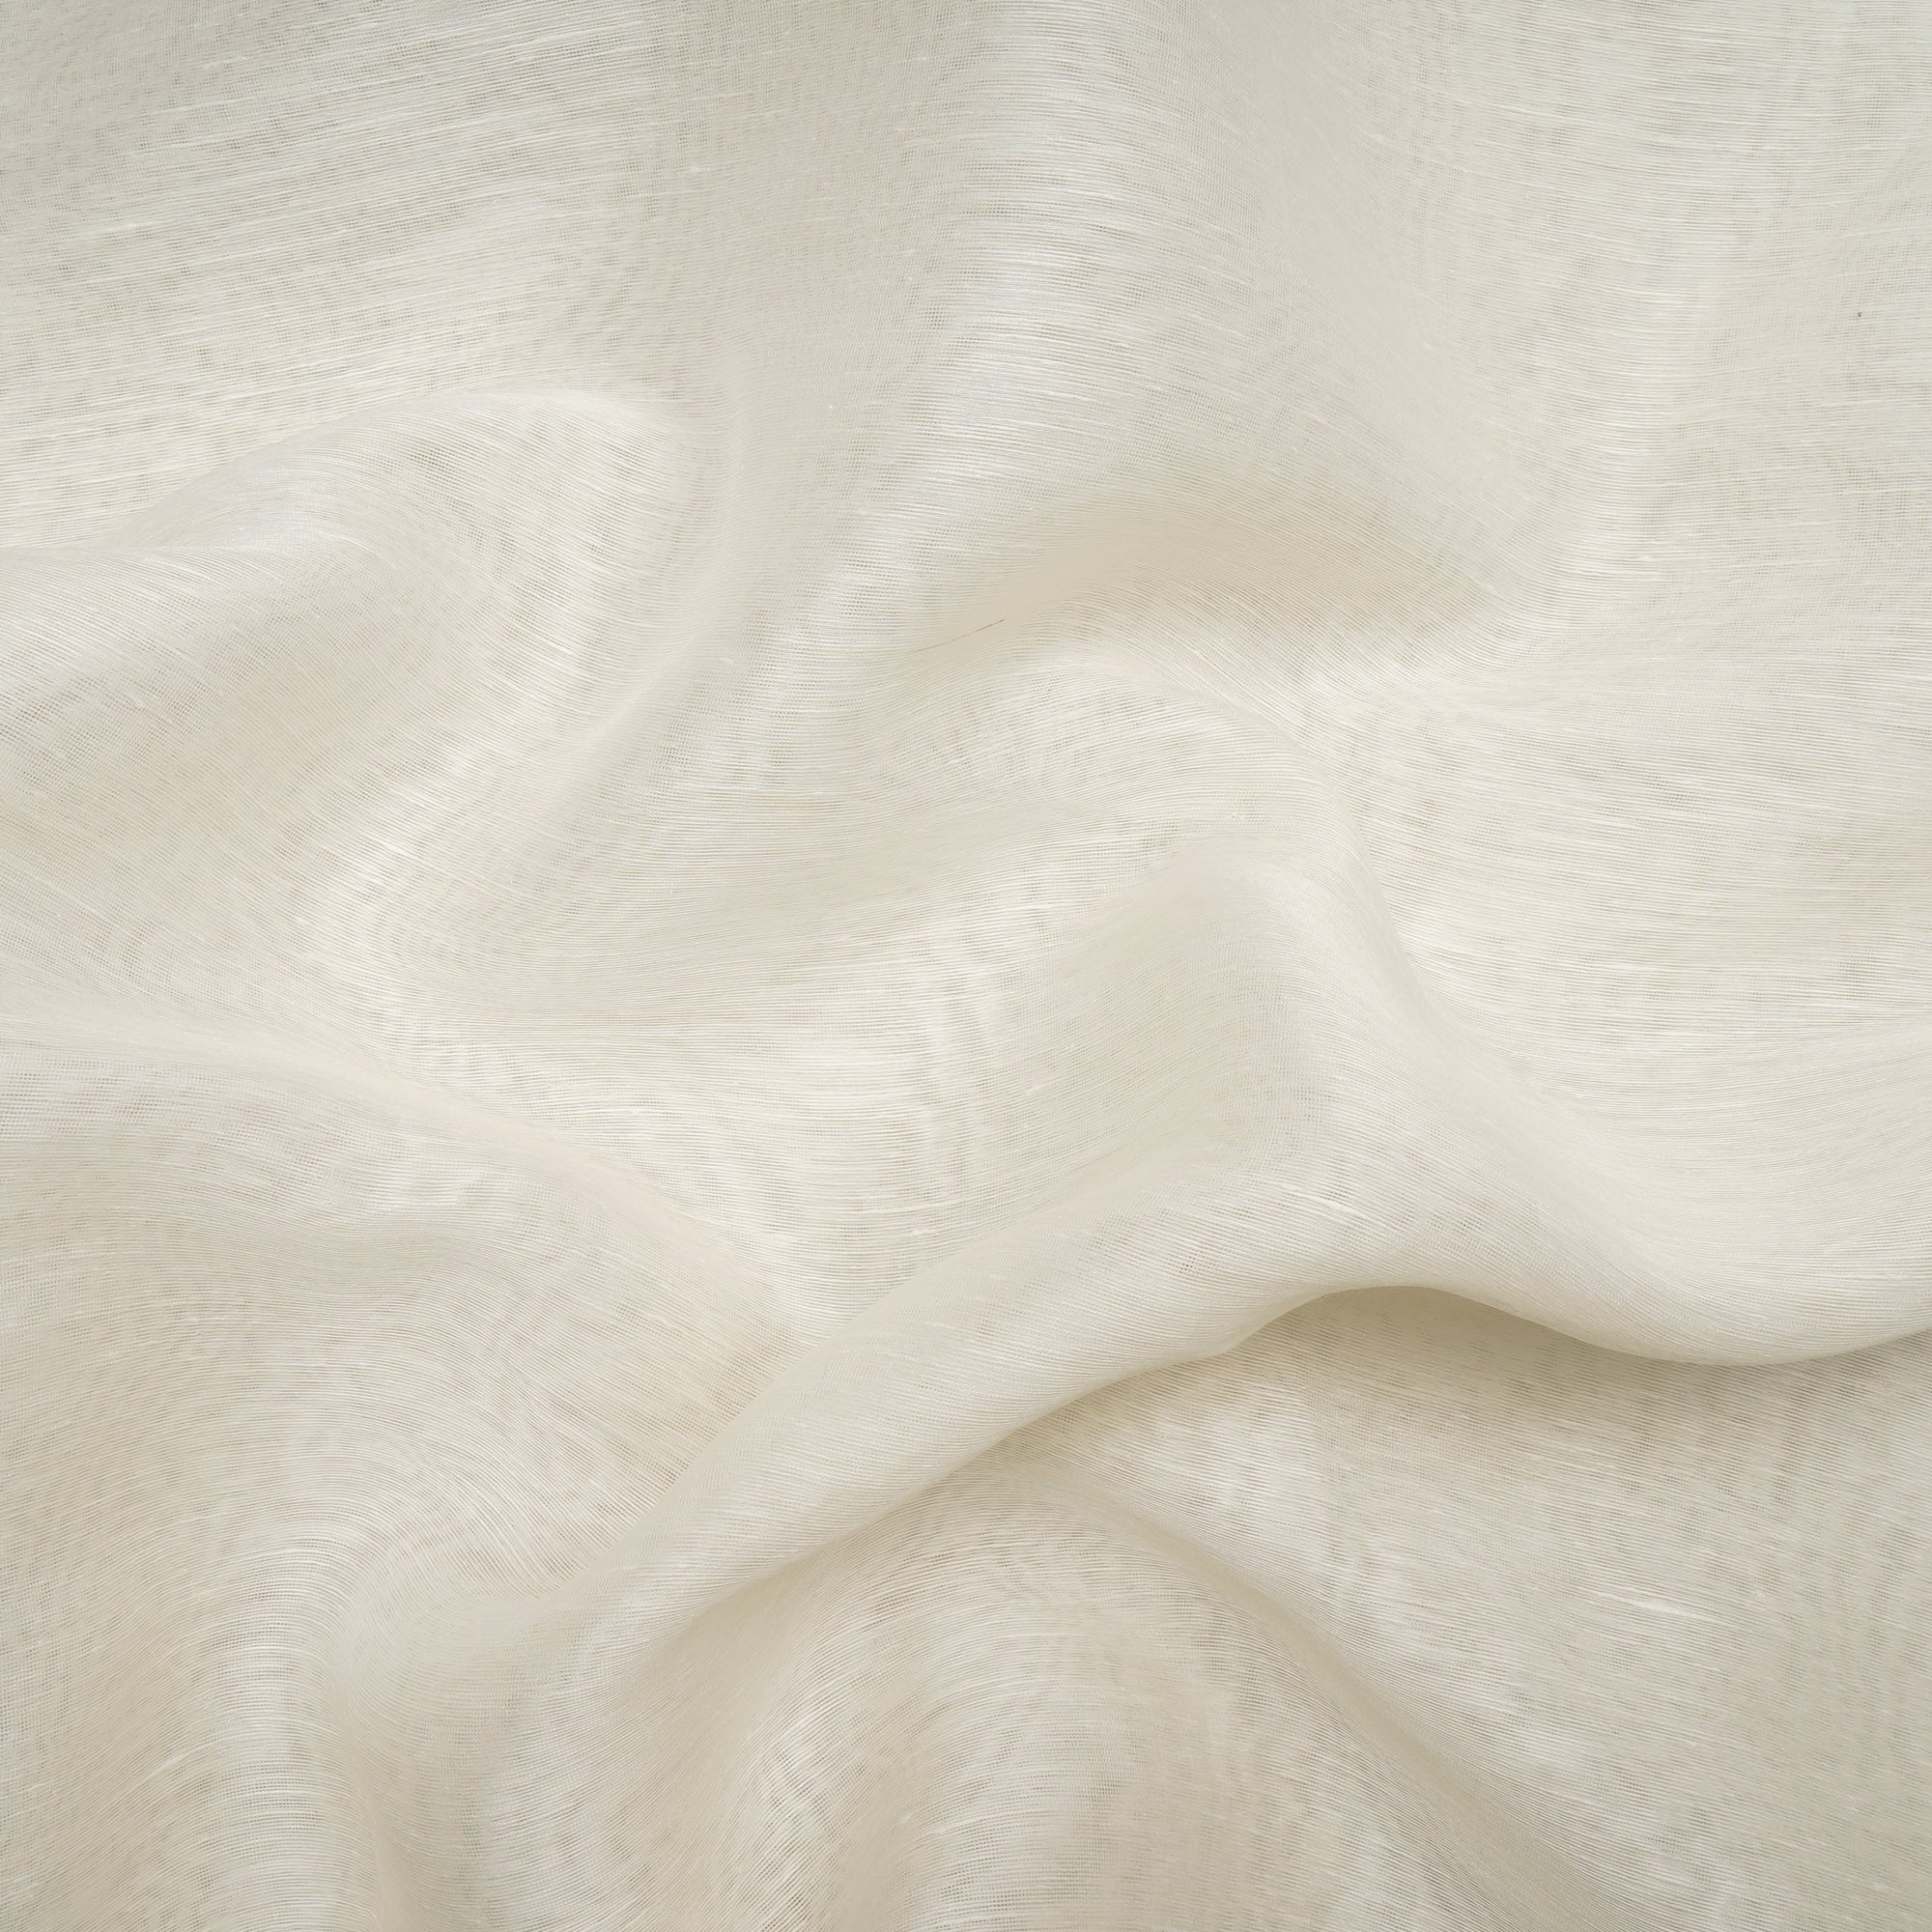 Off- White Color Banarasi Silk Linen Fabric With Zari Border